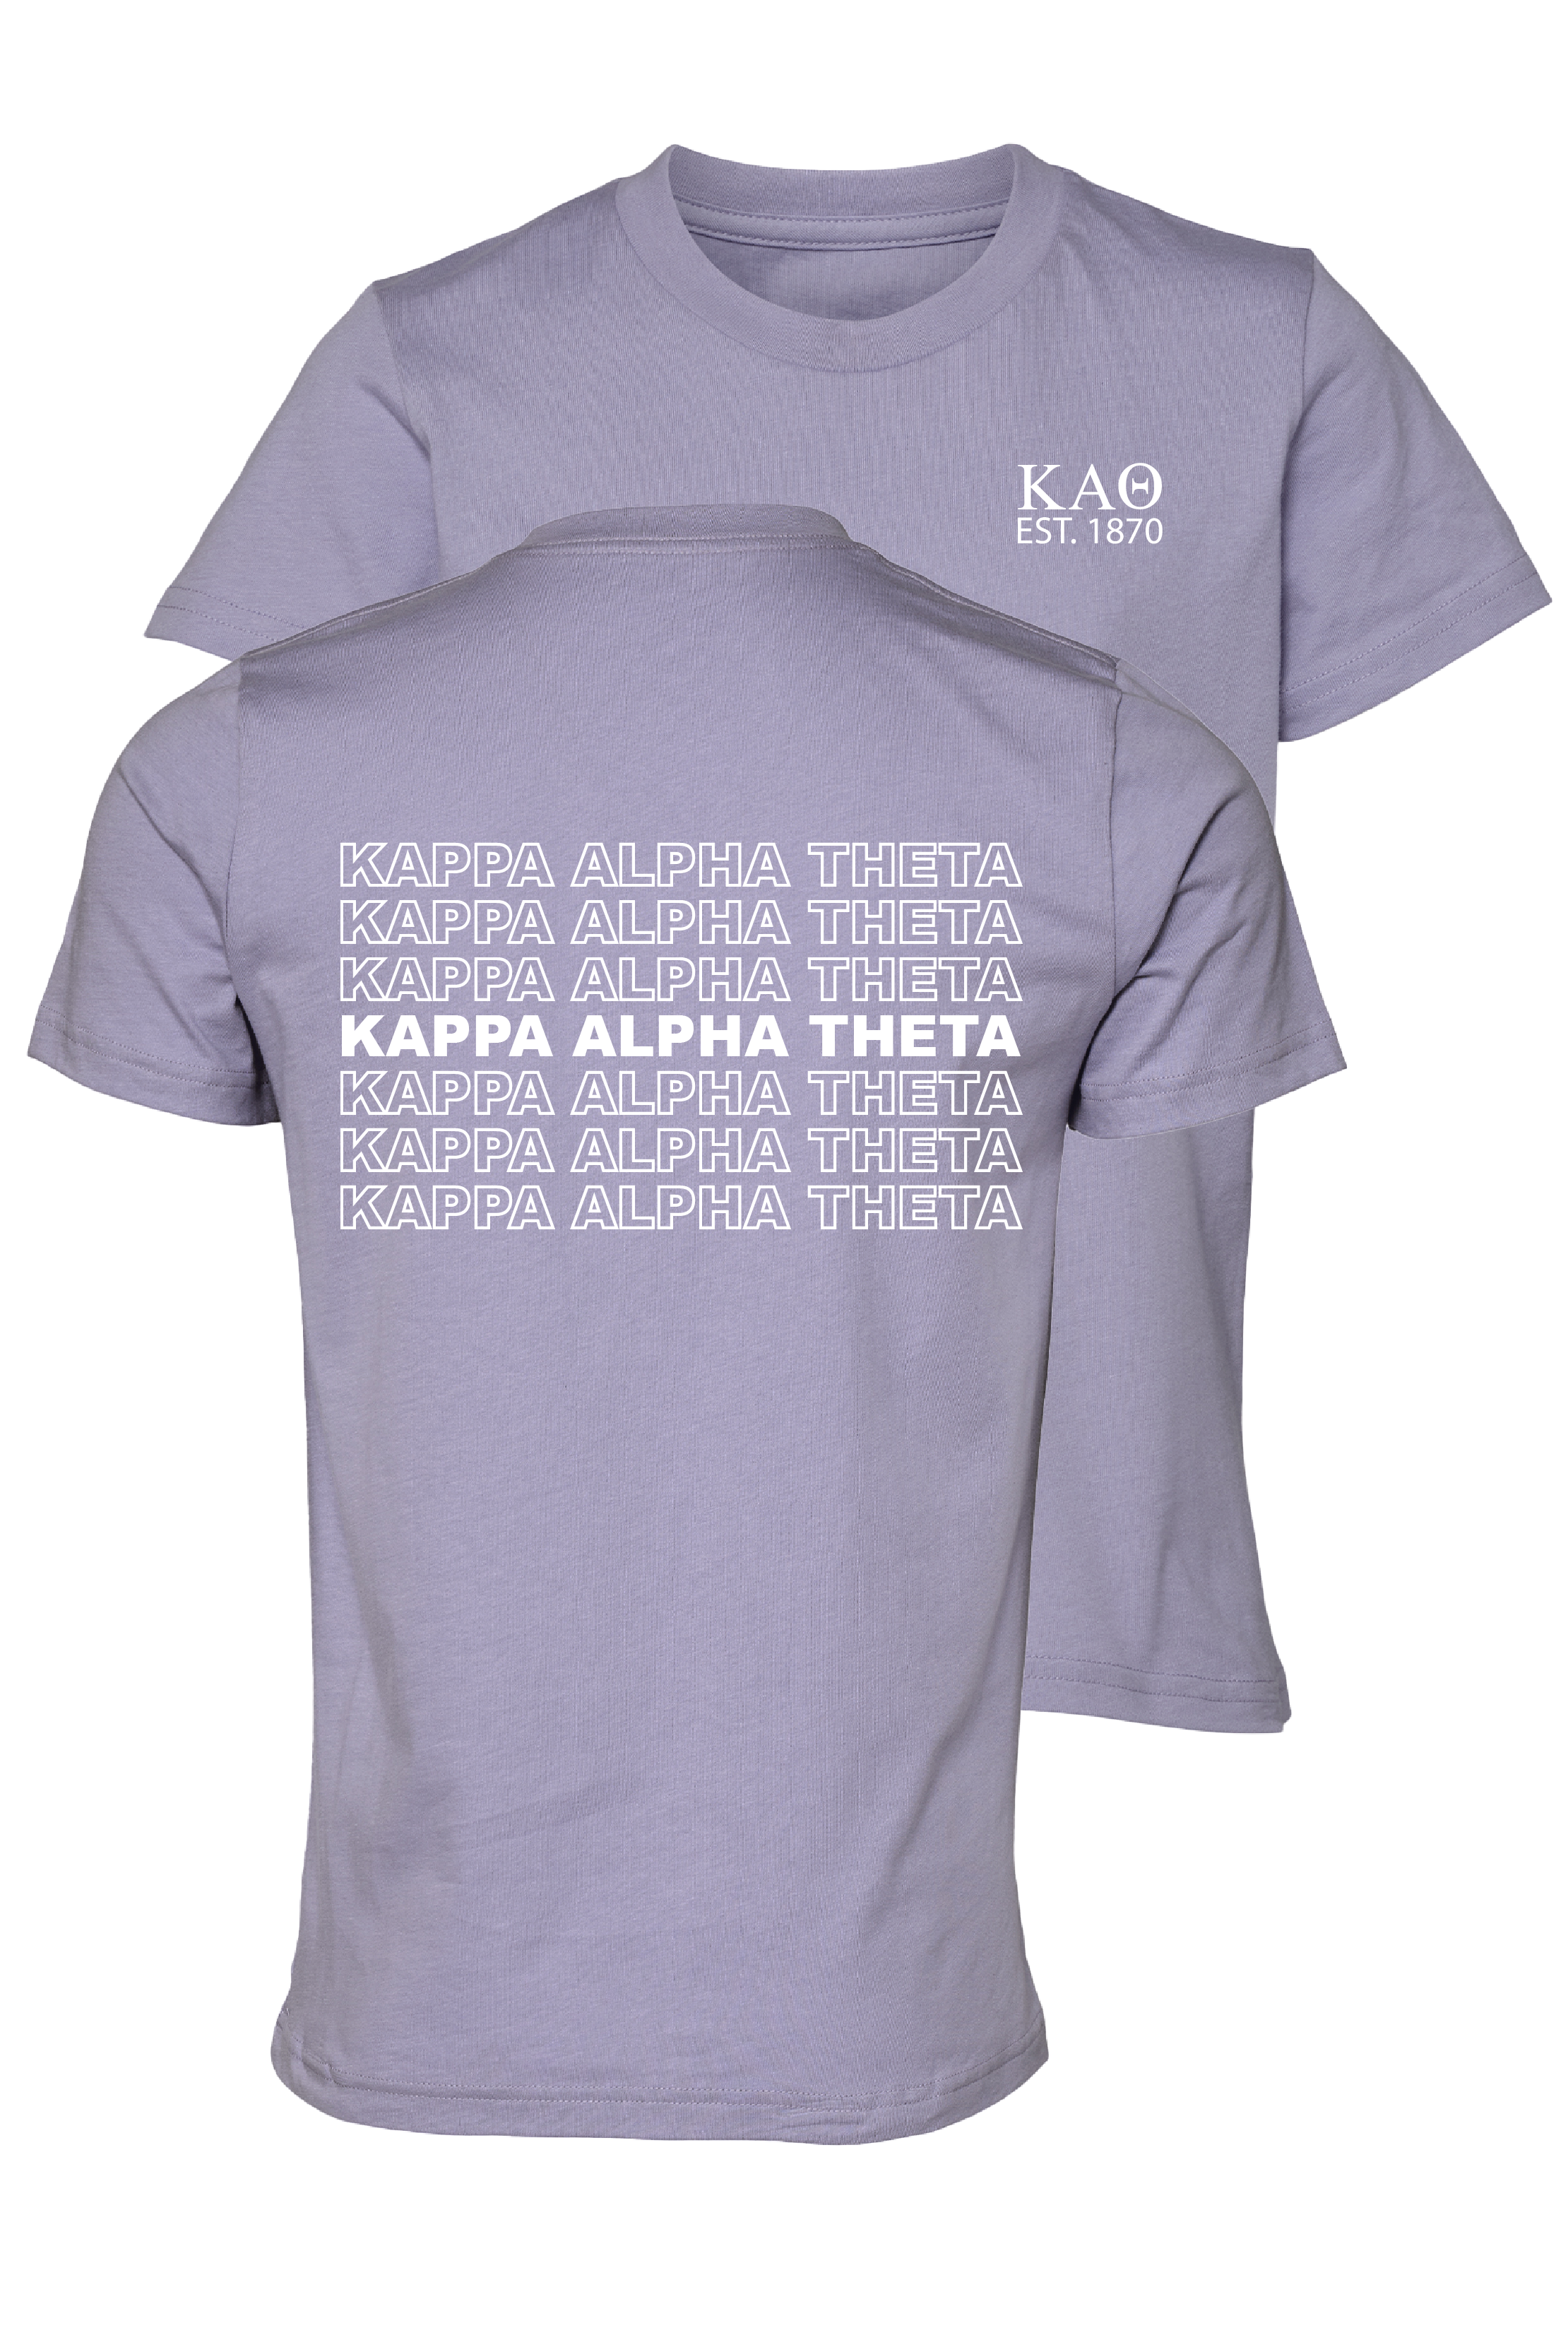 Kappa Theta Repeating Name Short Sleeve T-Shirts – Greek Graduate